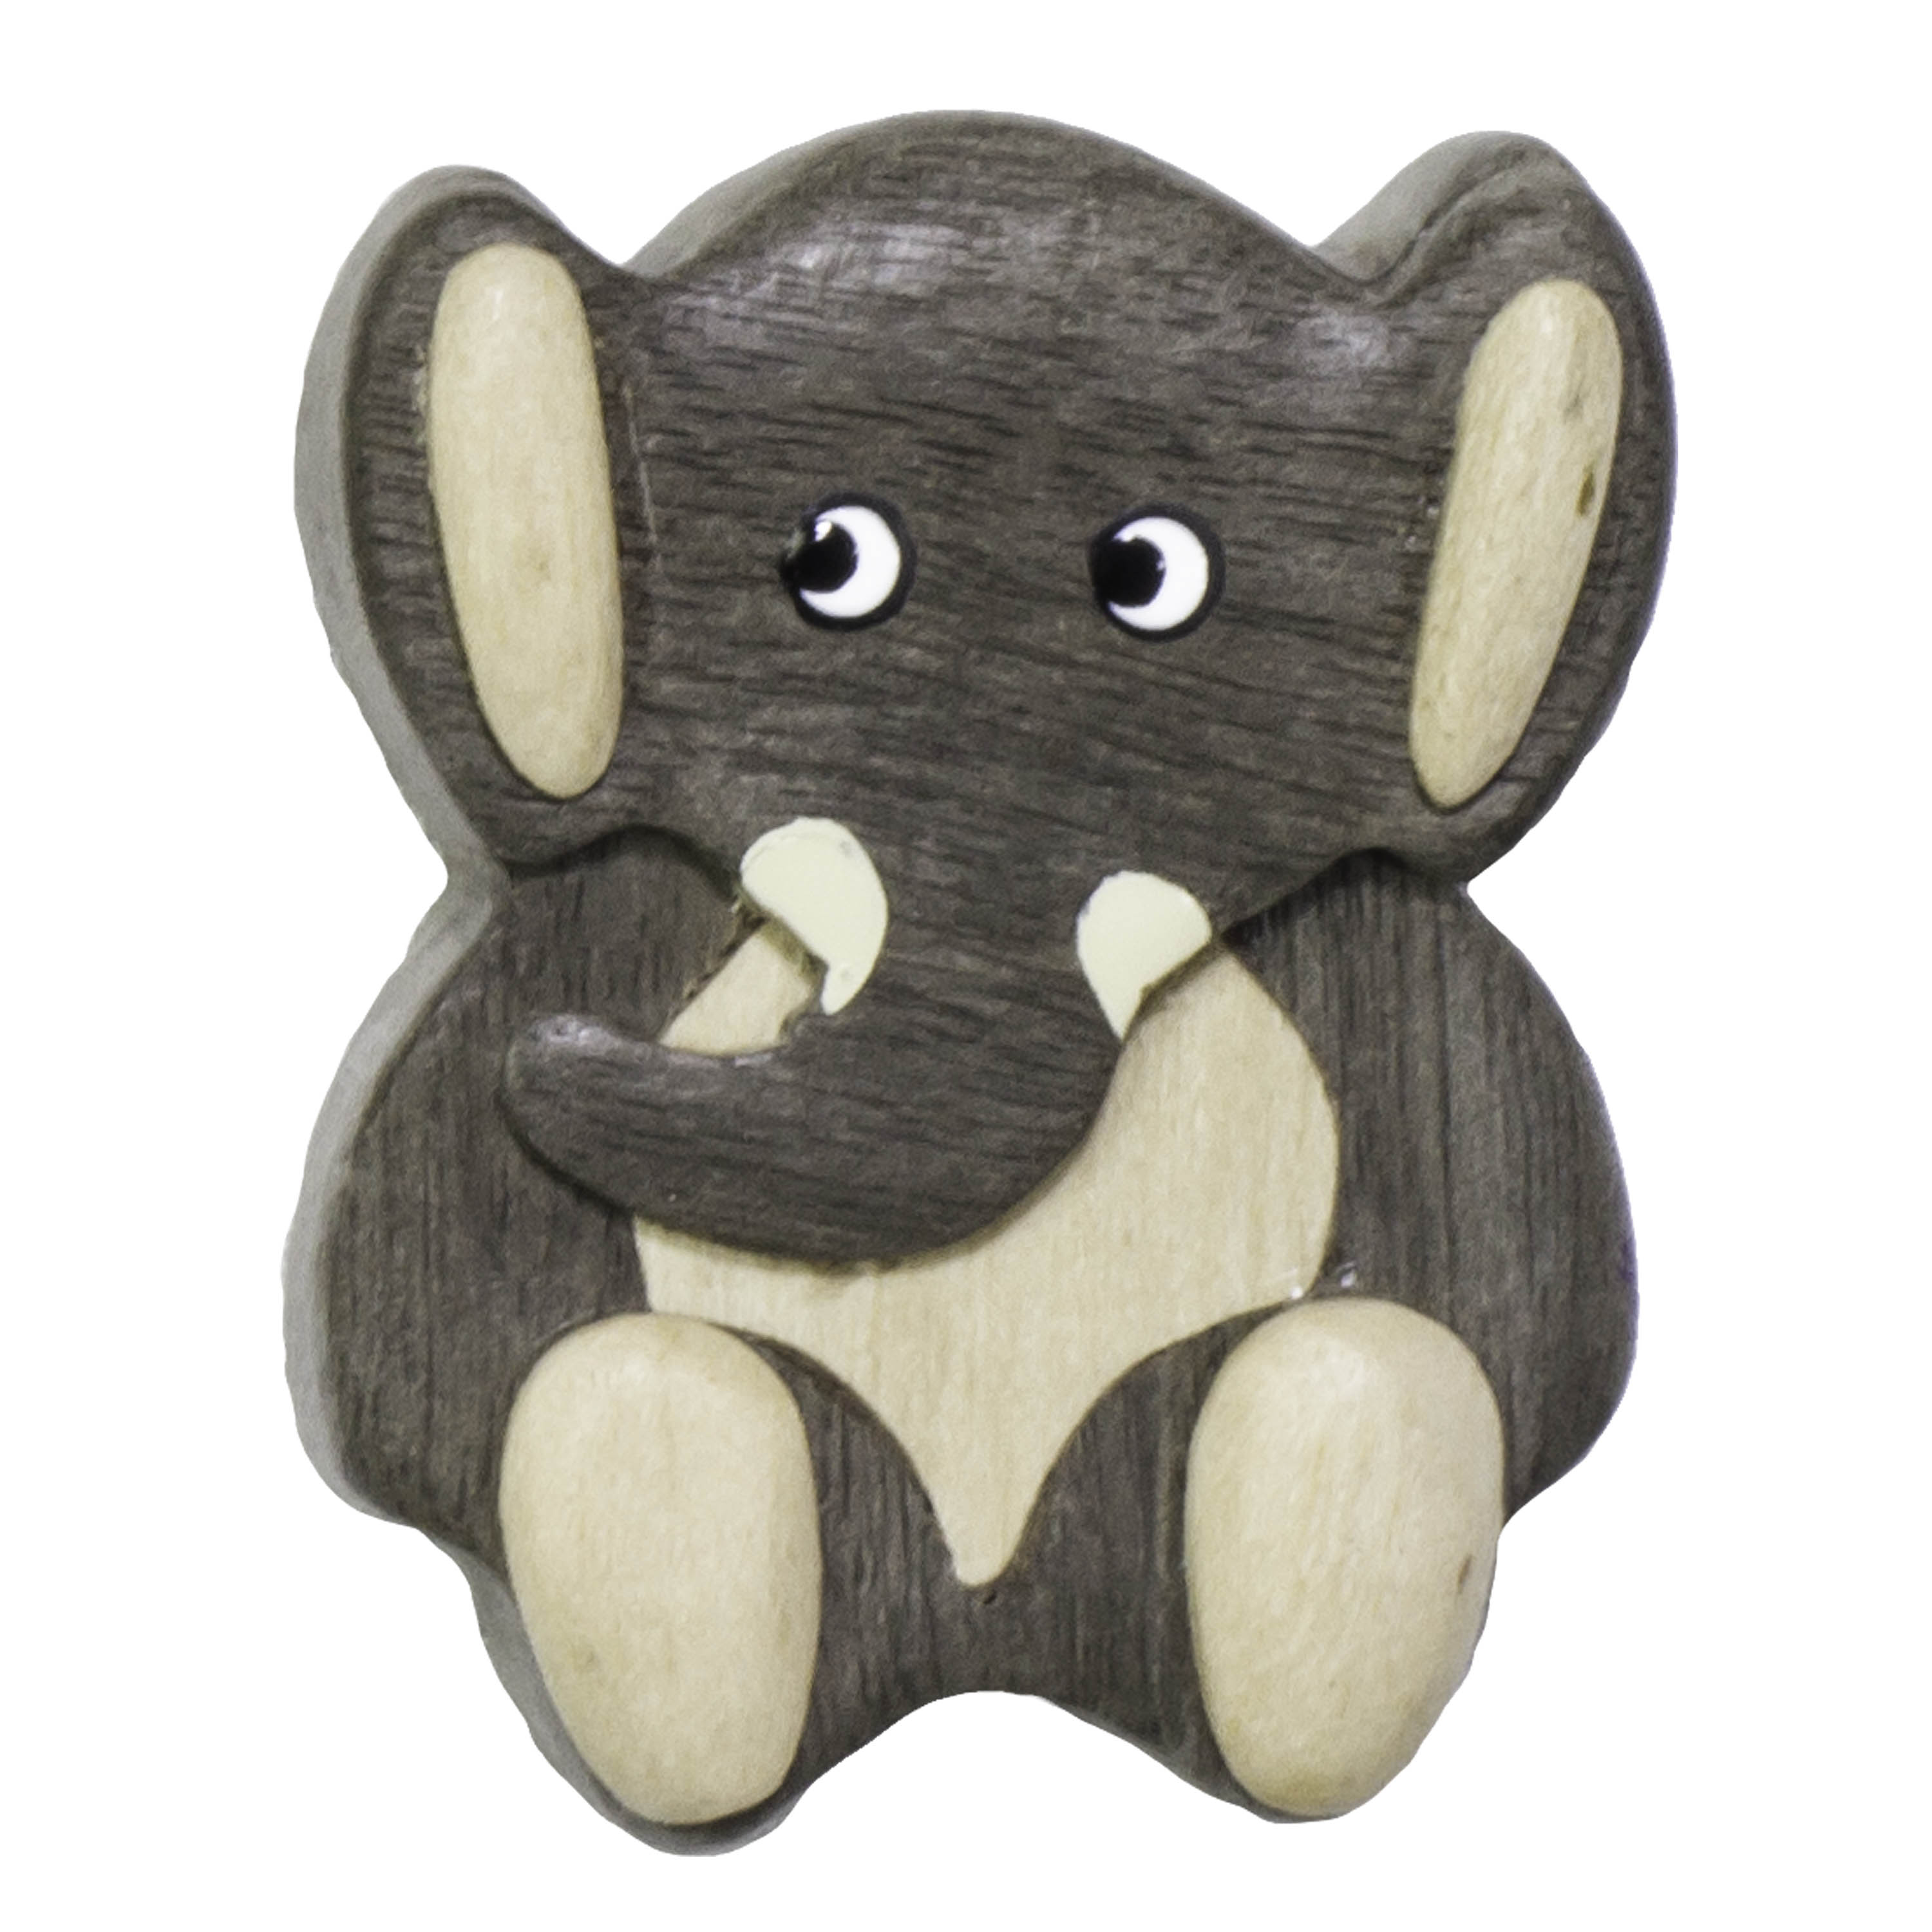 Bao-Elephant Sitting magnet (3 pieces)